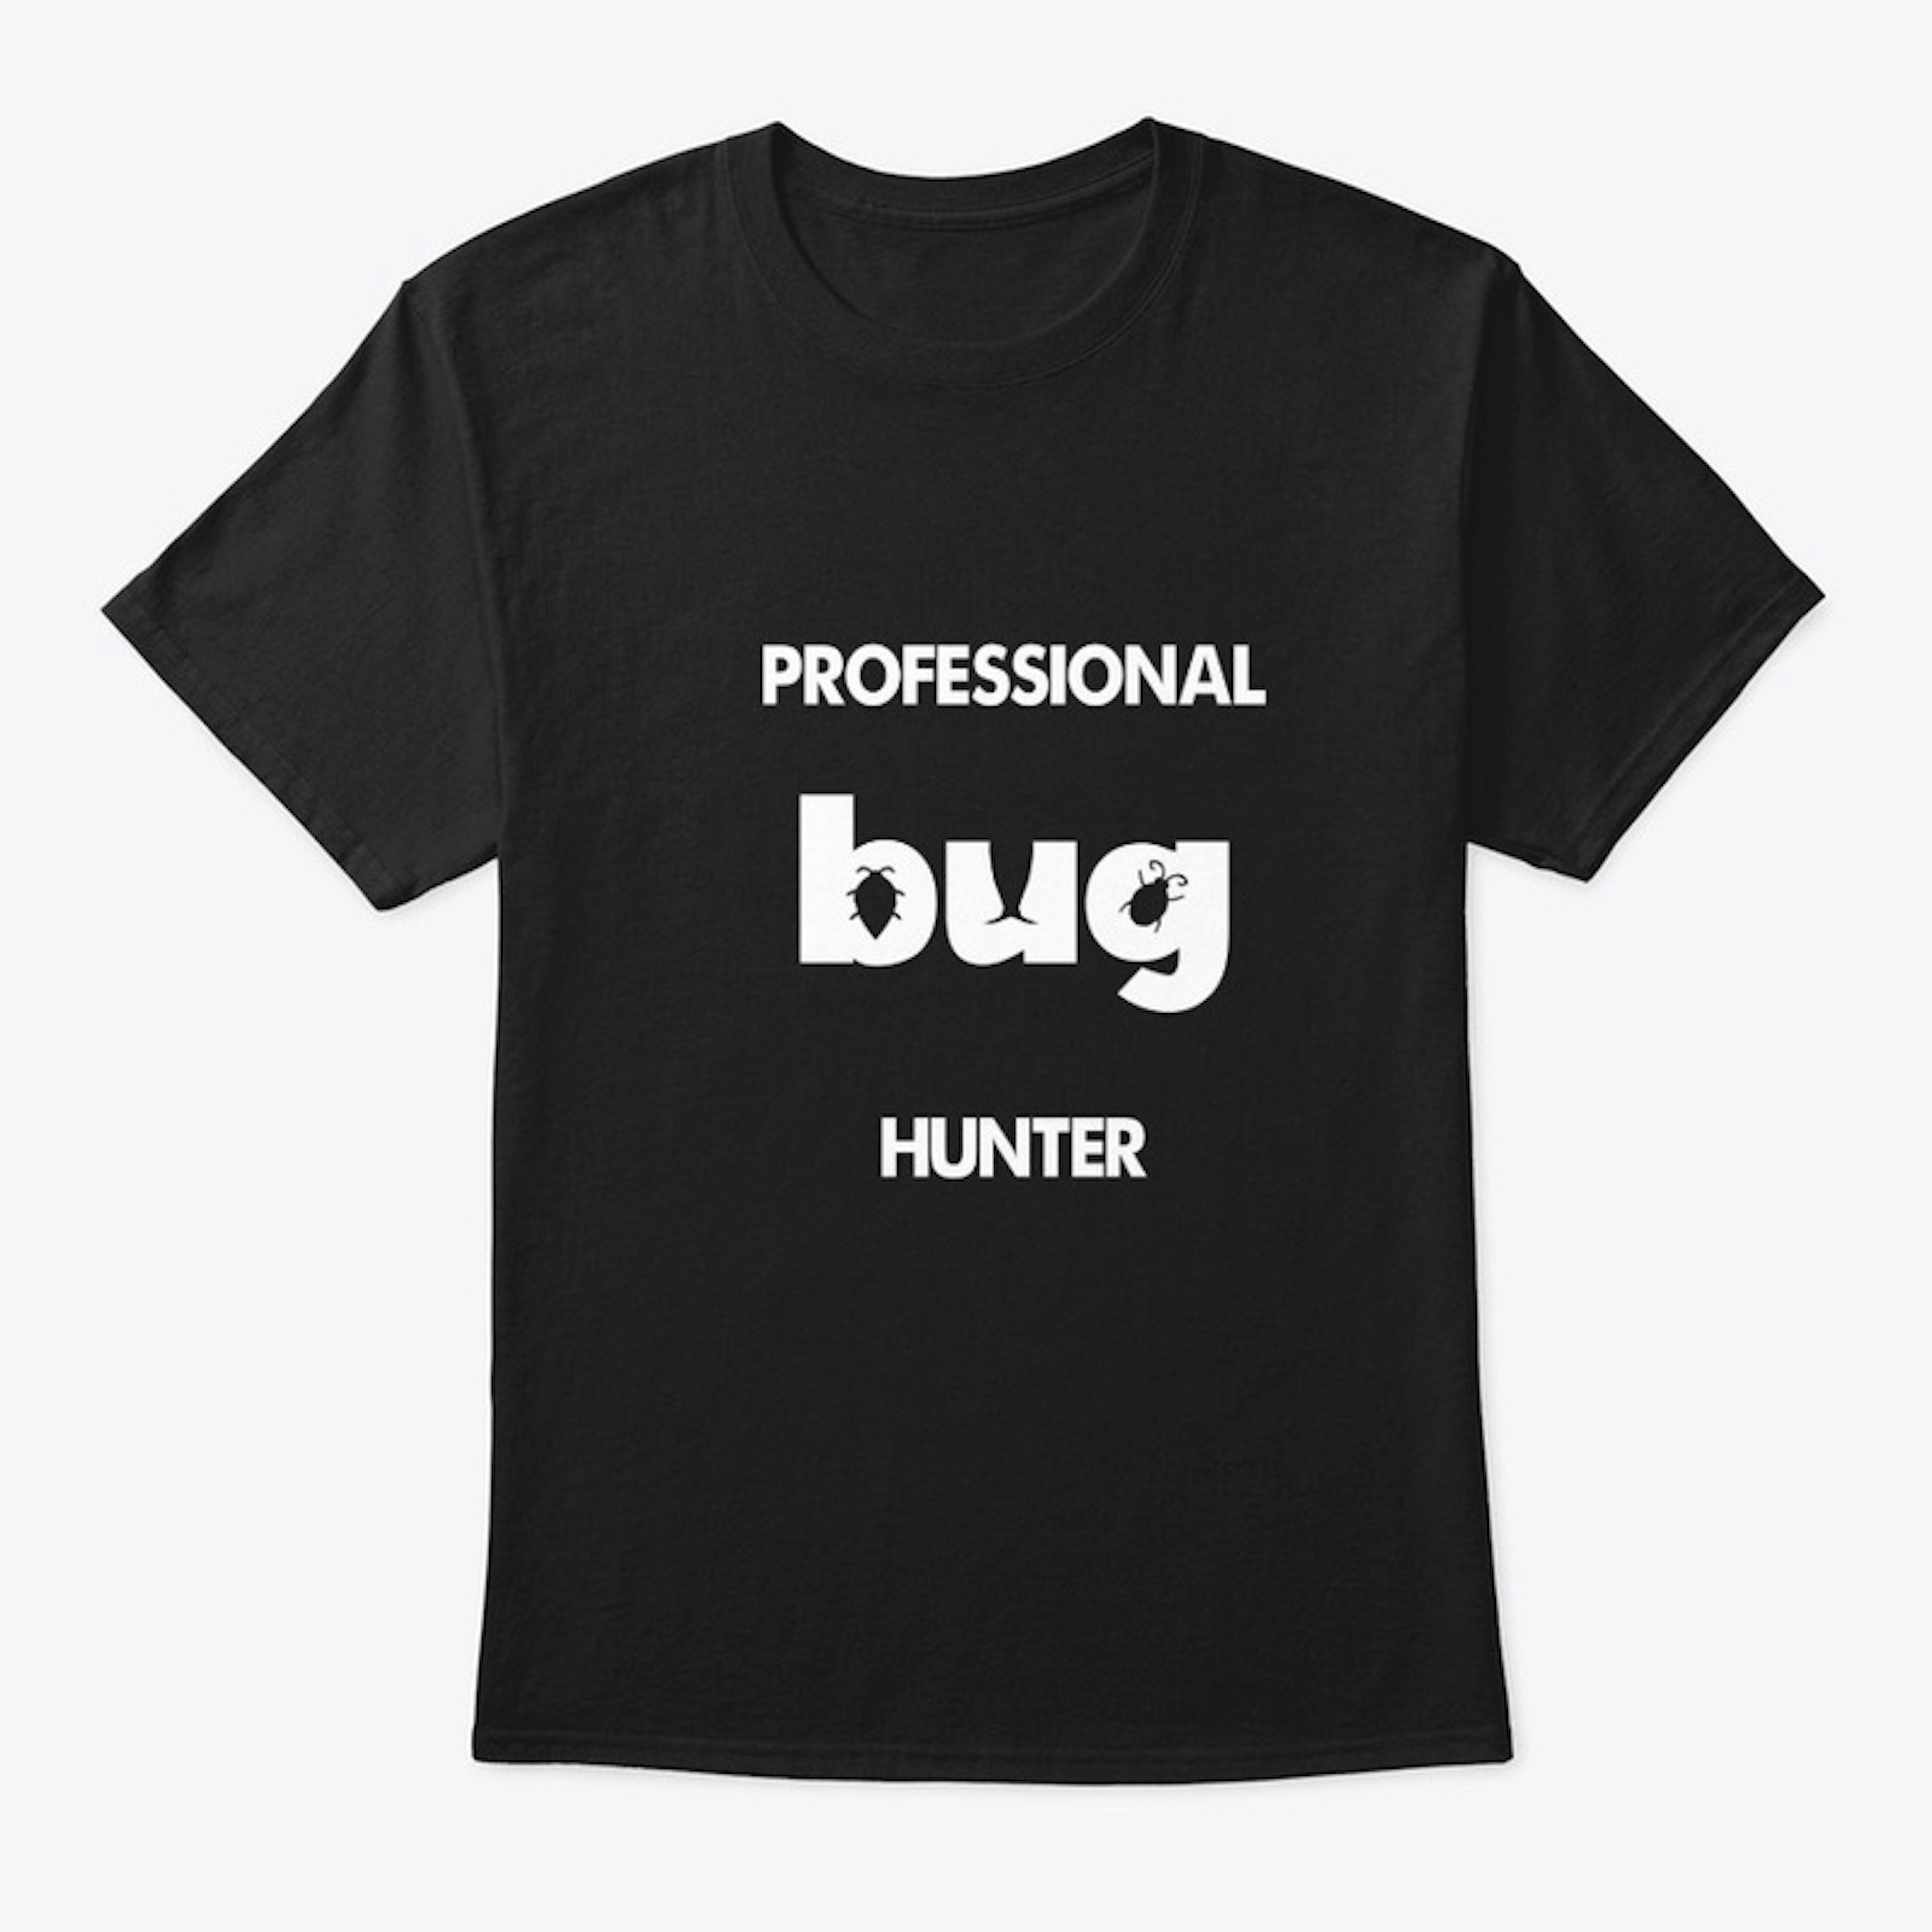 Professional bug hunter